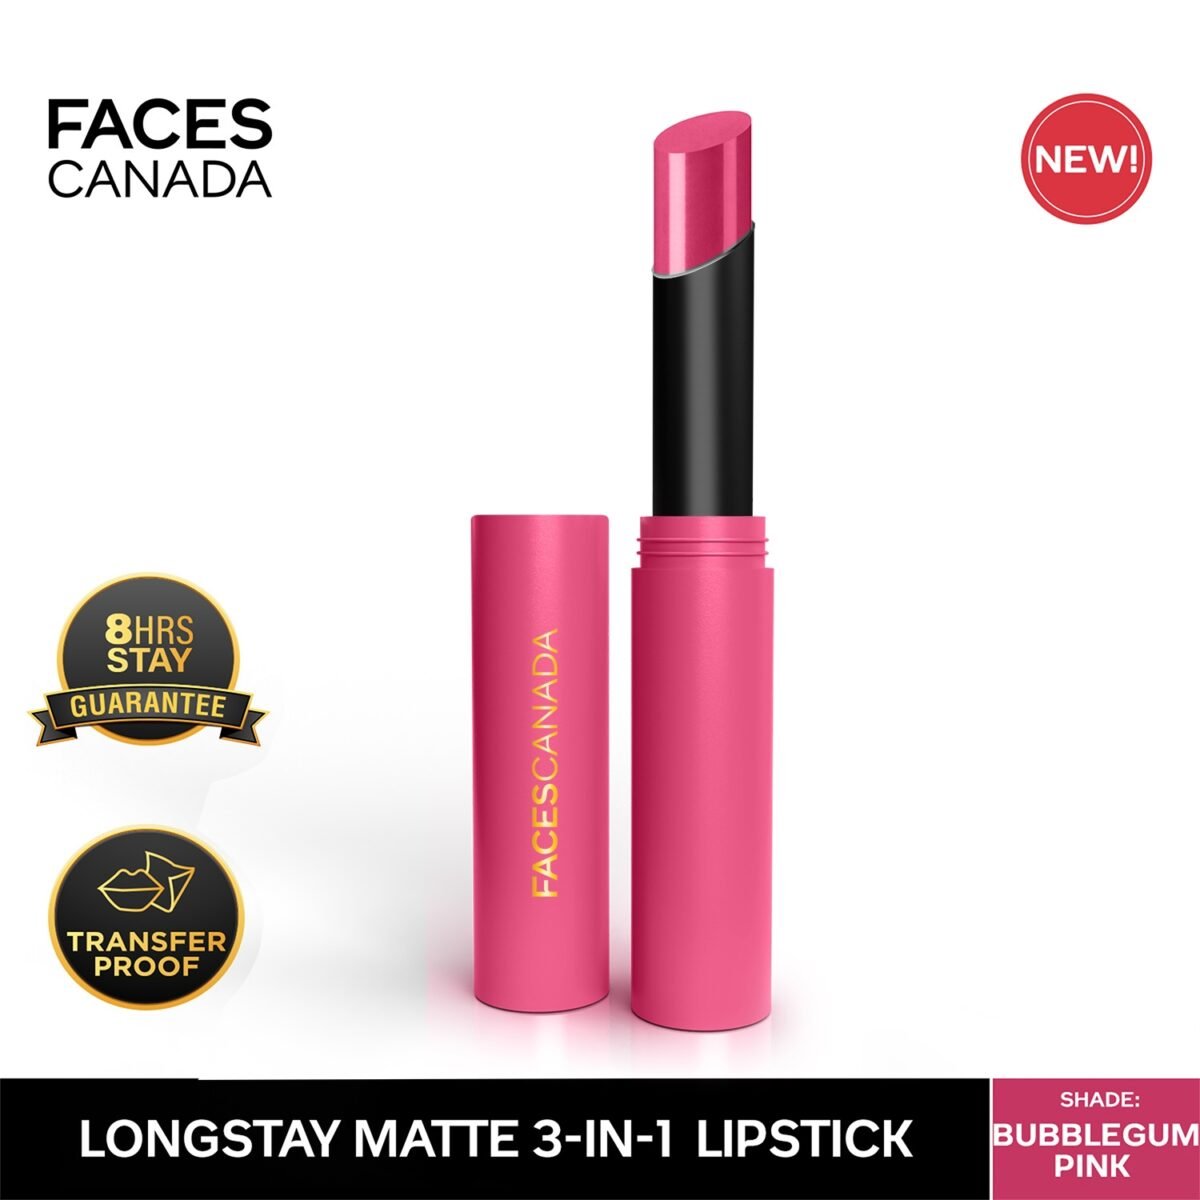 Faces Canada Long Stay Matte Lipstick, 04 Bubblegum Pink 2g